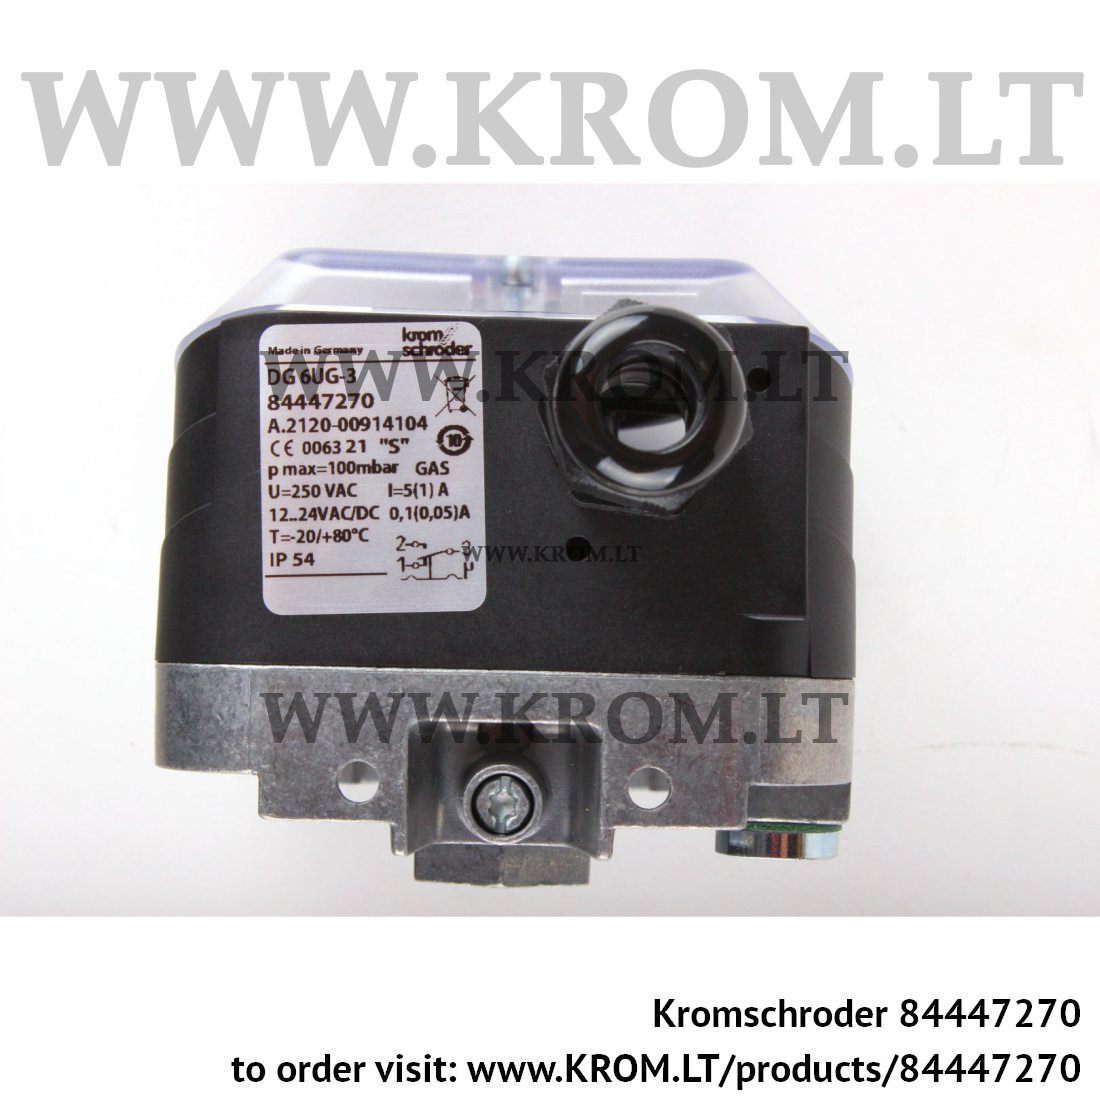 Kromschroder DG 6UG-3, 84447270 pressure switch for gas | Online store